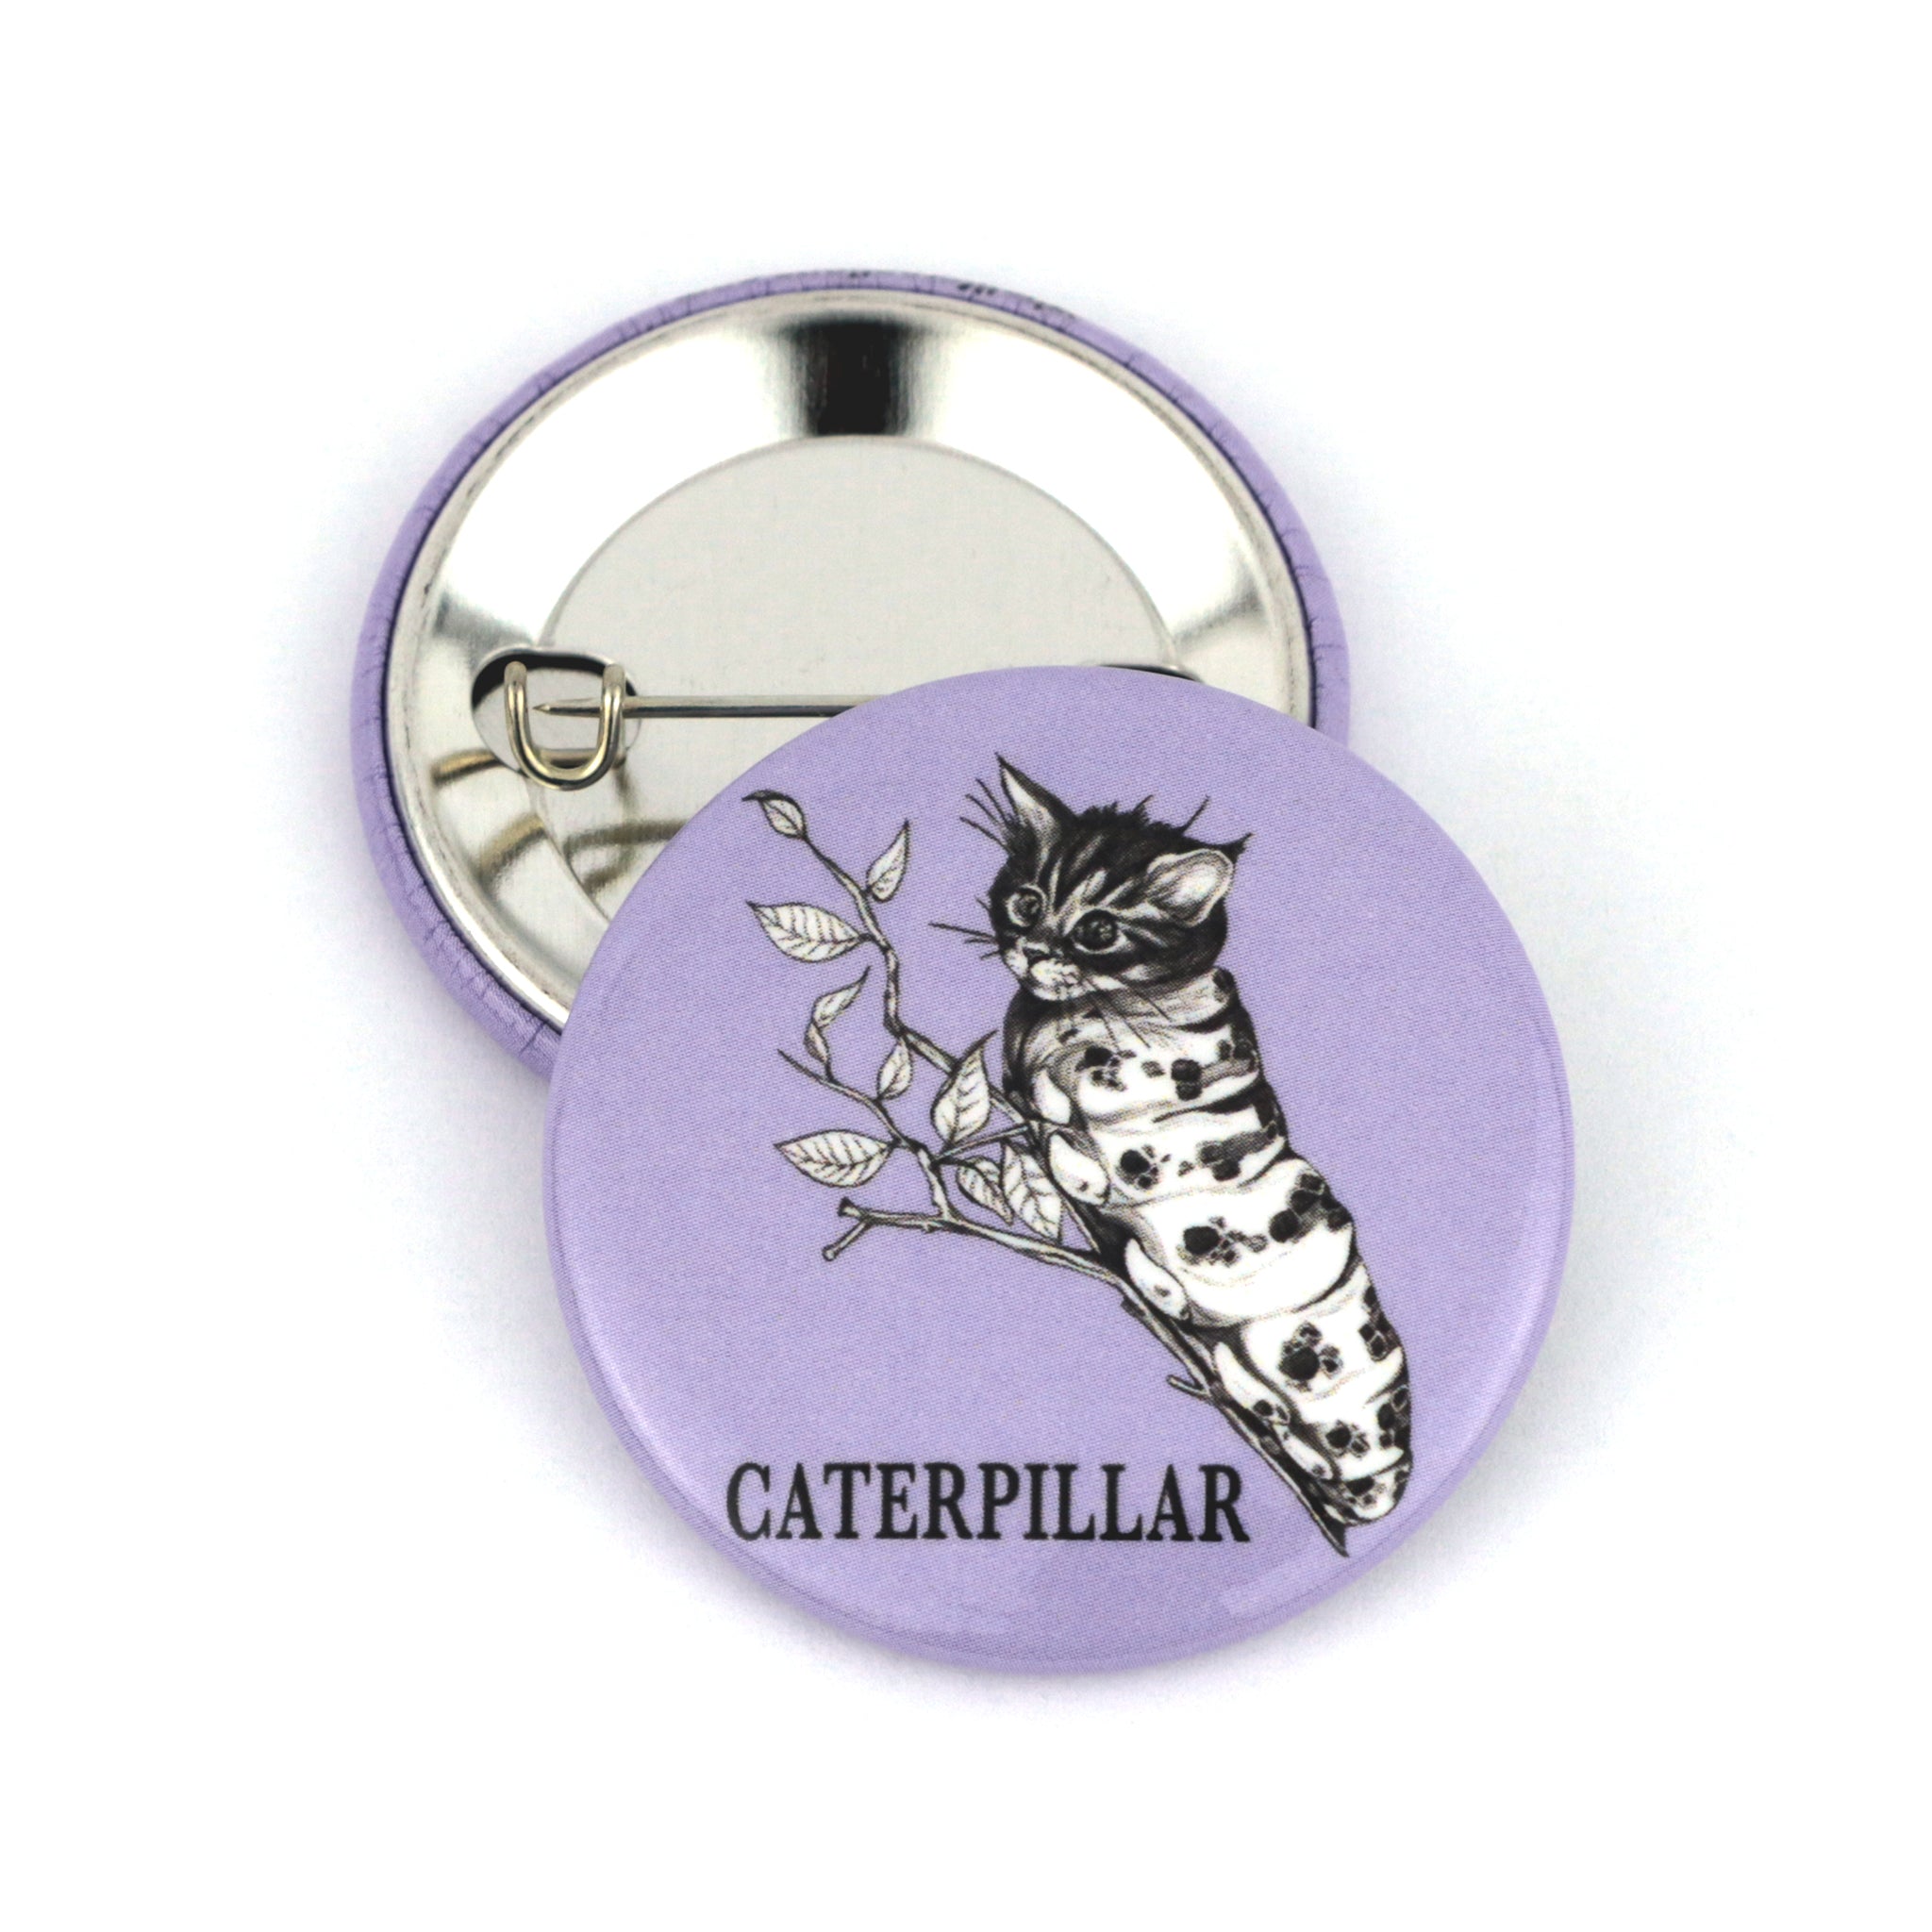 Caterpillar 1.5" Pinback Button